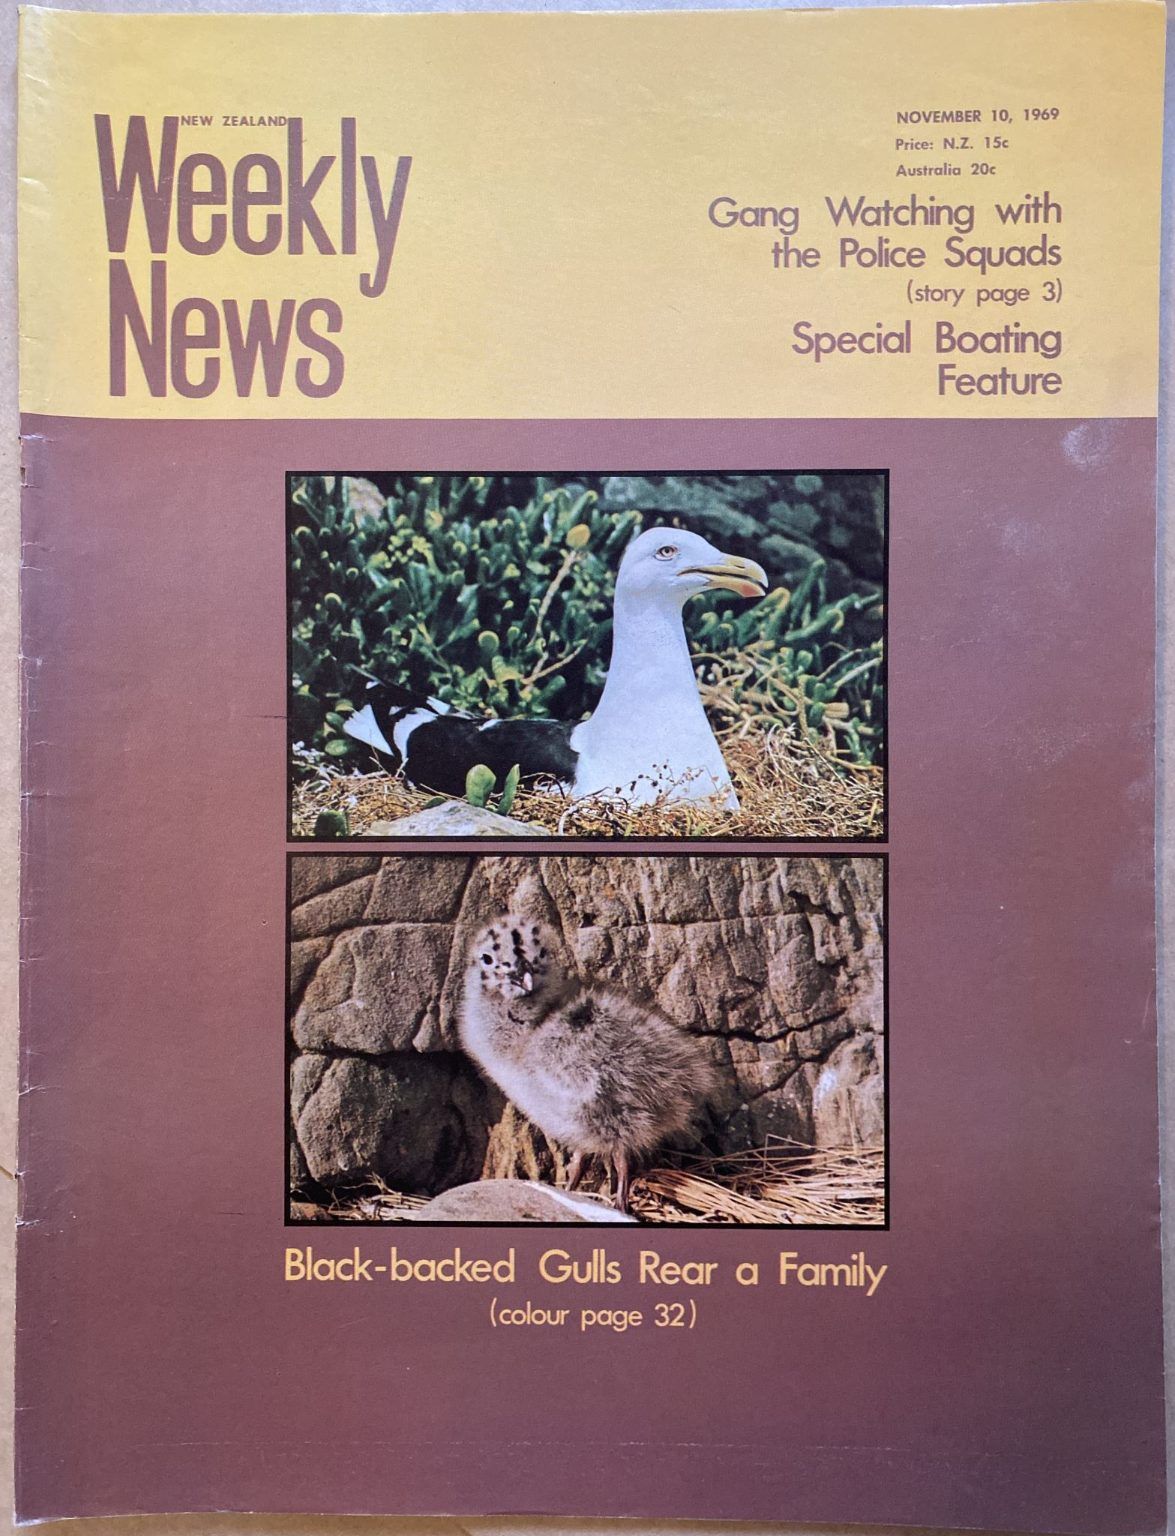 OLD NEWSPAPER: New Zealand Weekly News, No. 5528, 10 November 1969